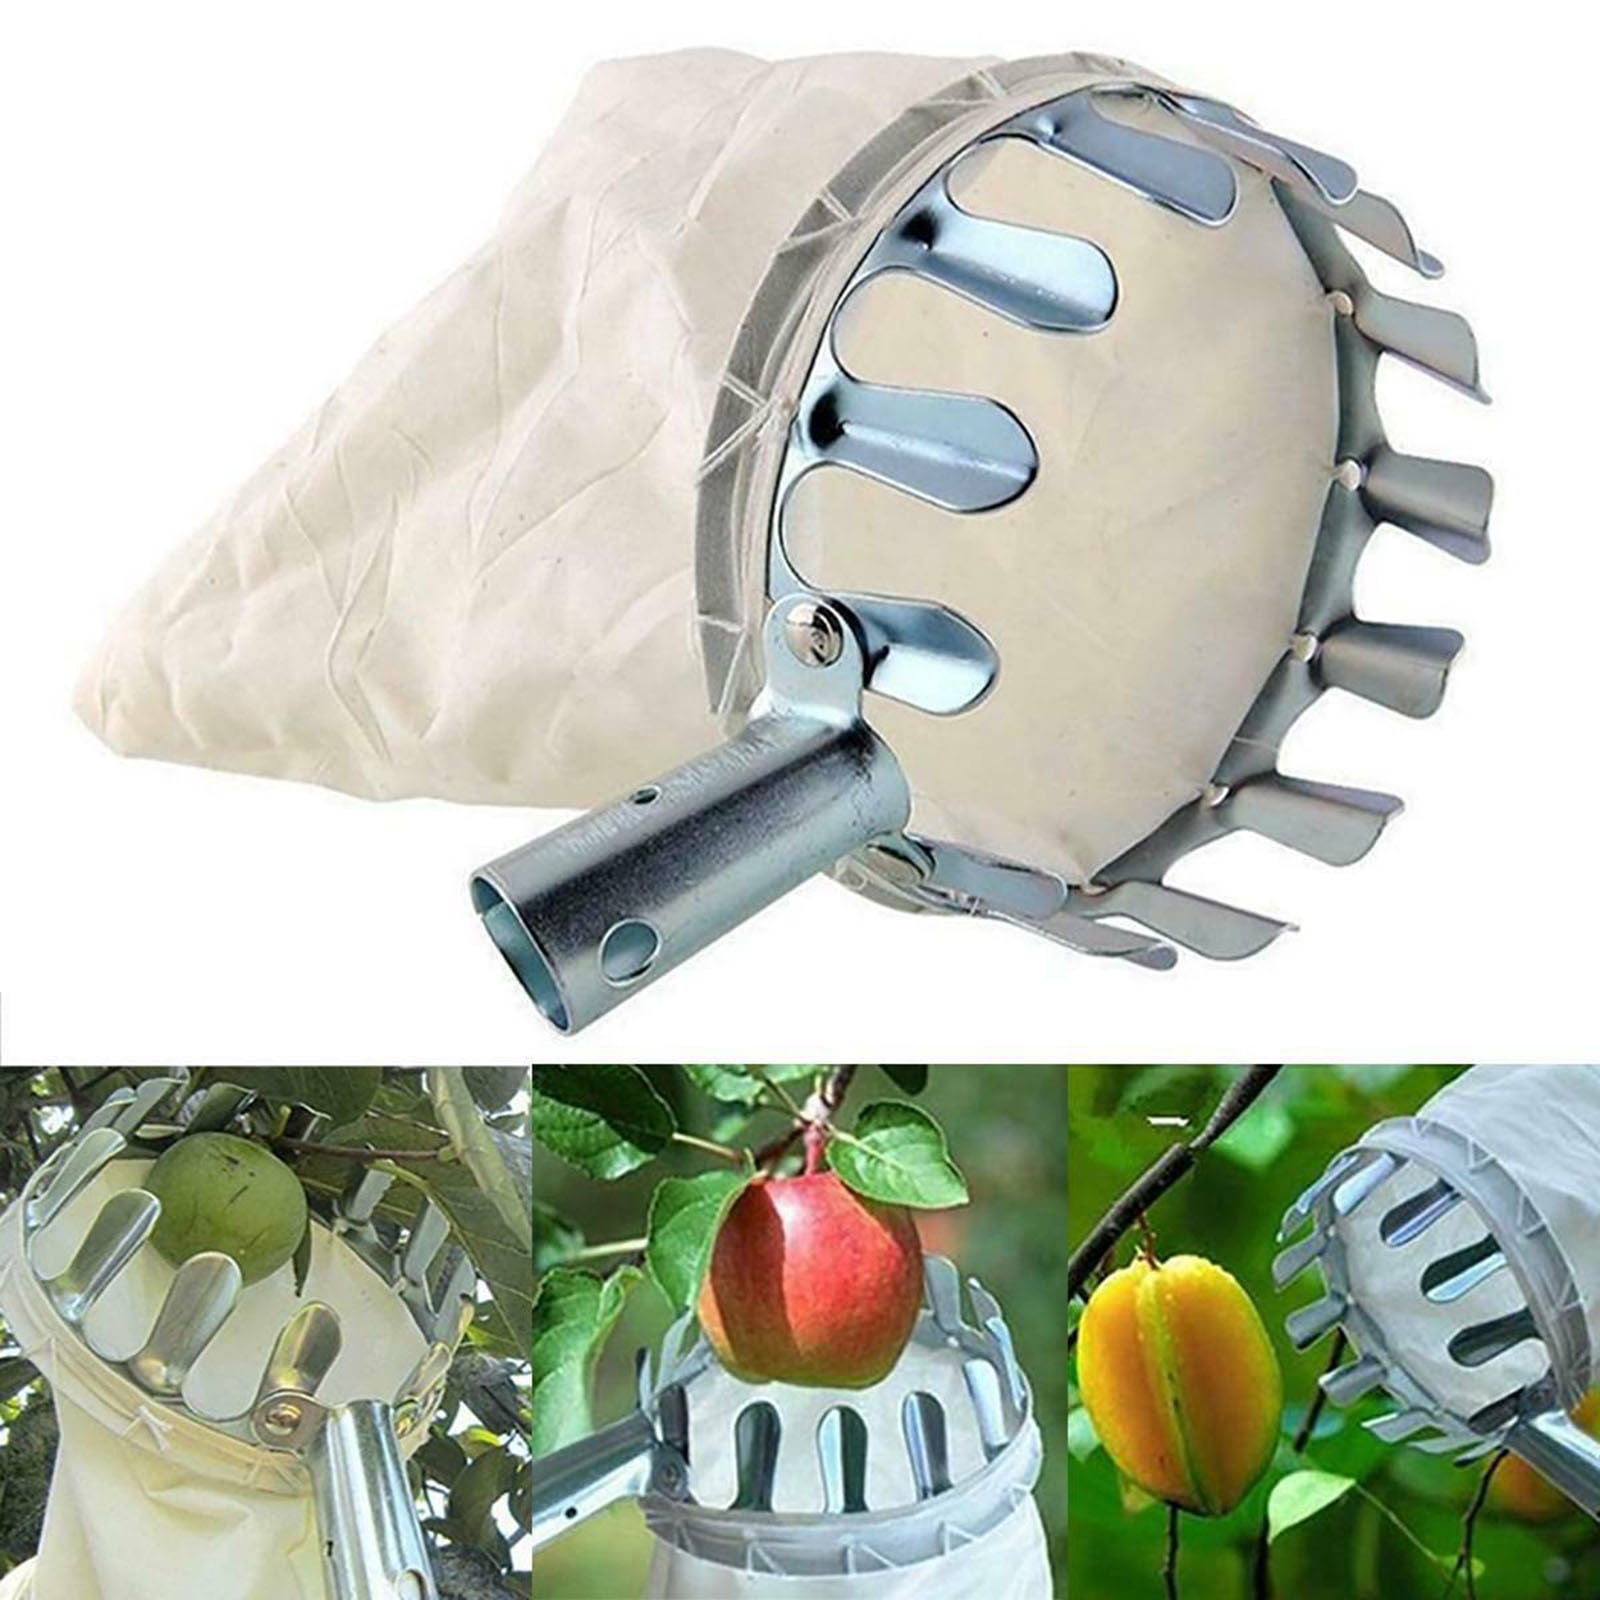 Horticultural Orchard Convenient Fruit Picker Apple Orange Pear Picking Tool bag 